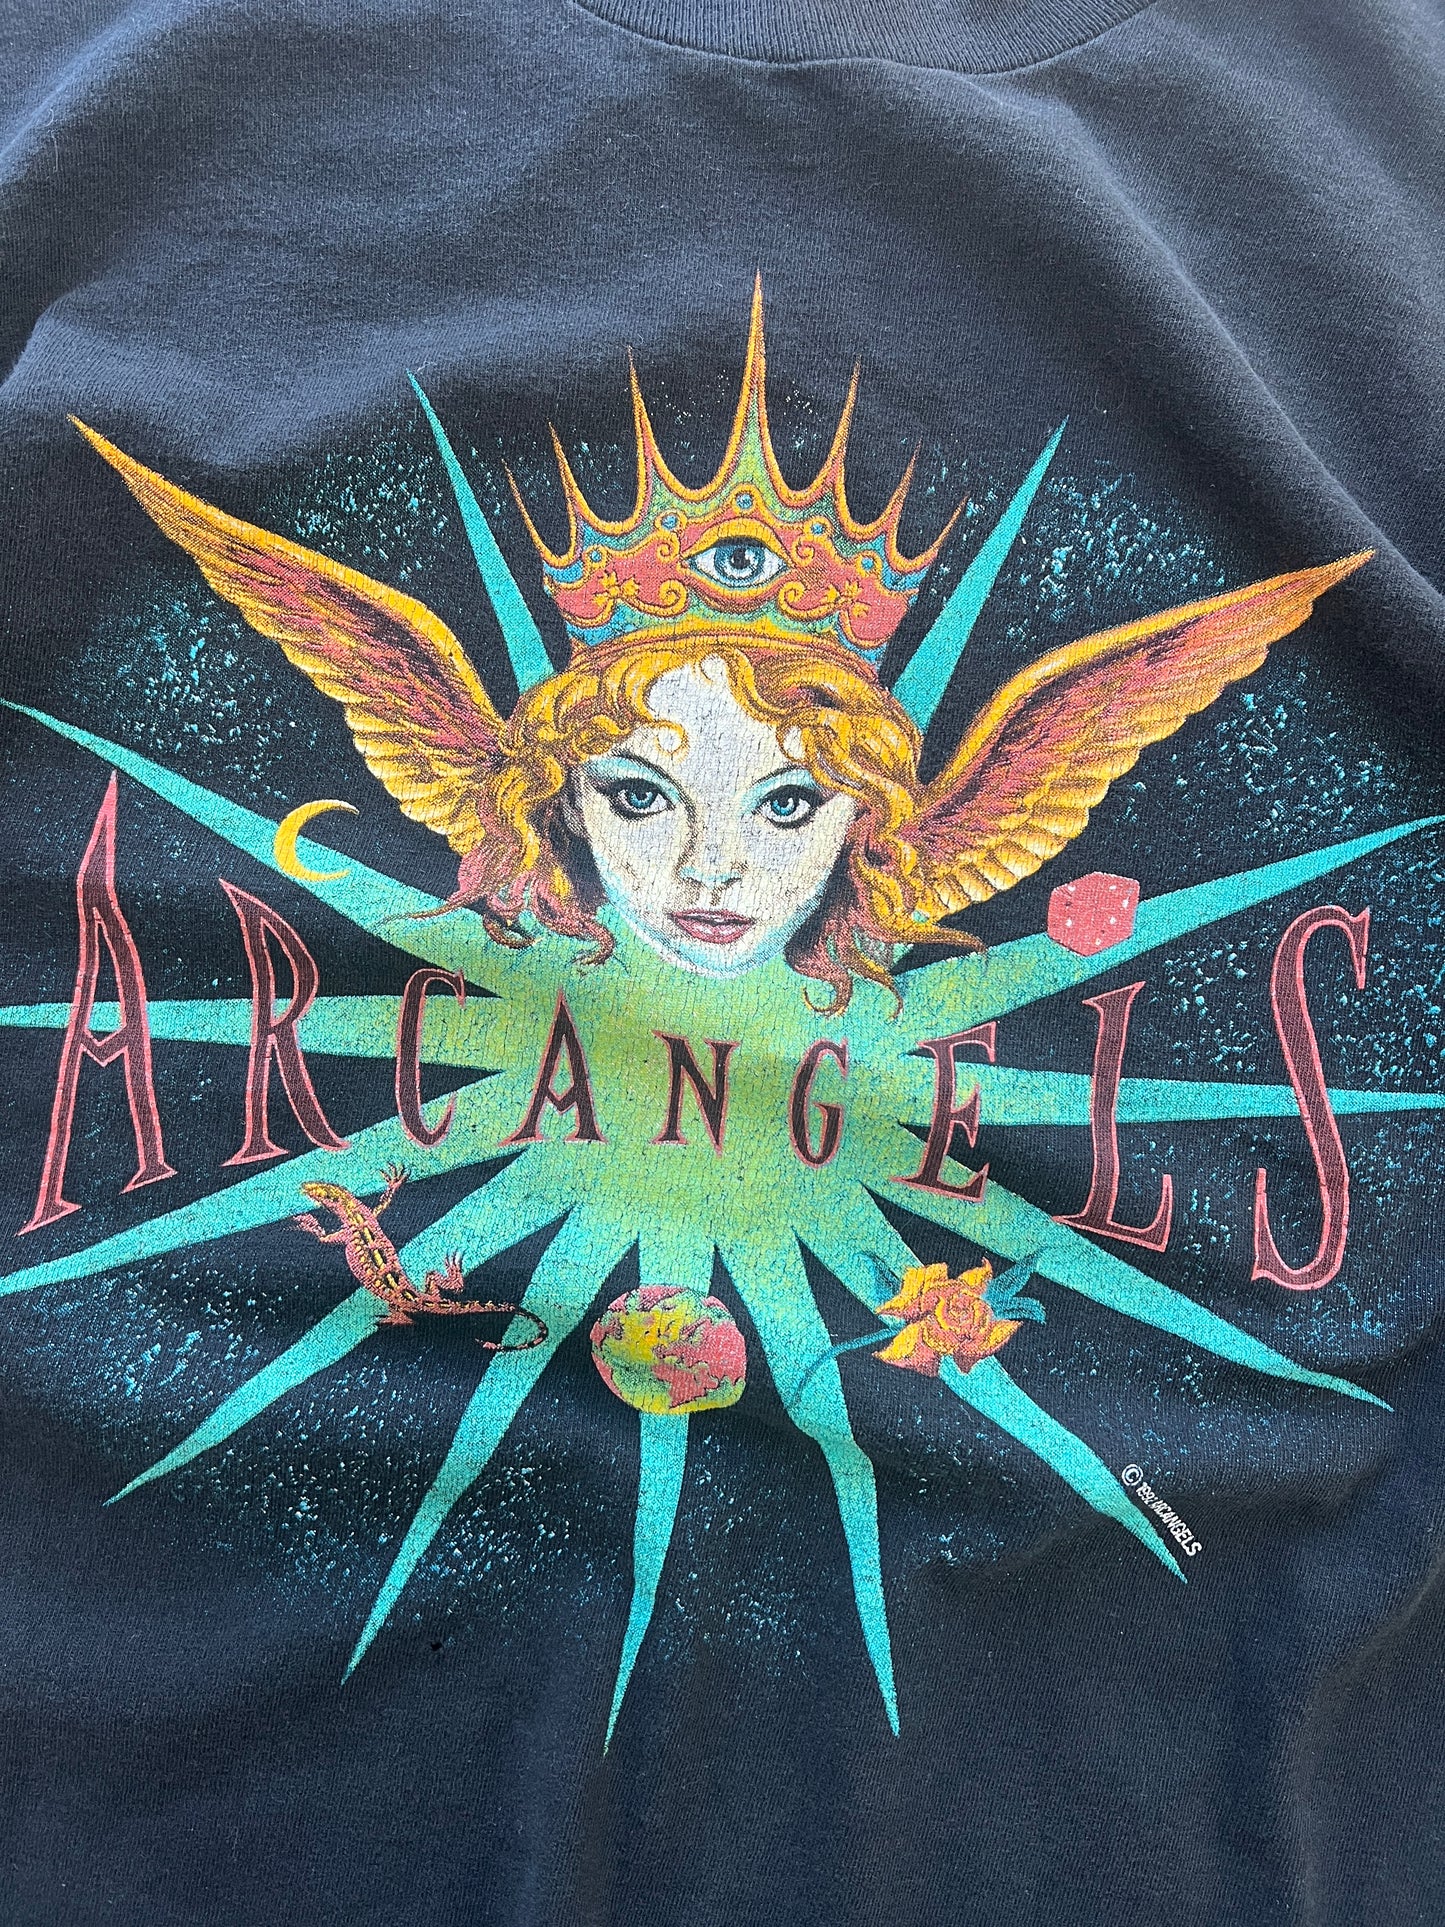 Vintage Arcangels Band Shirt - XL